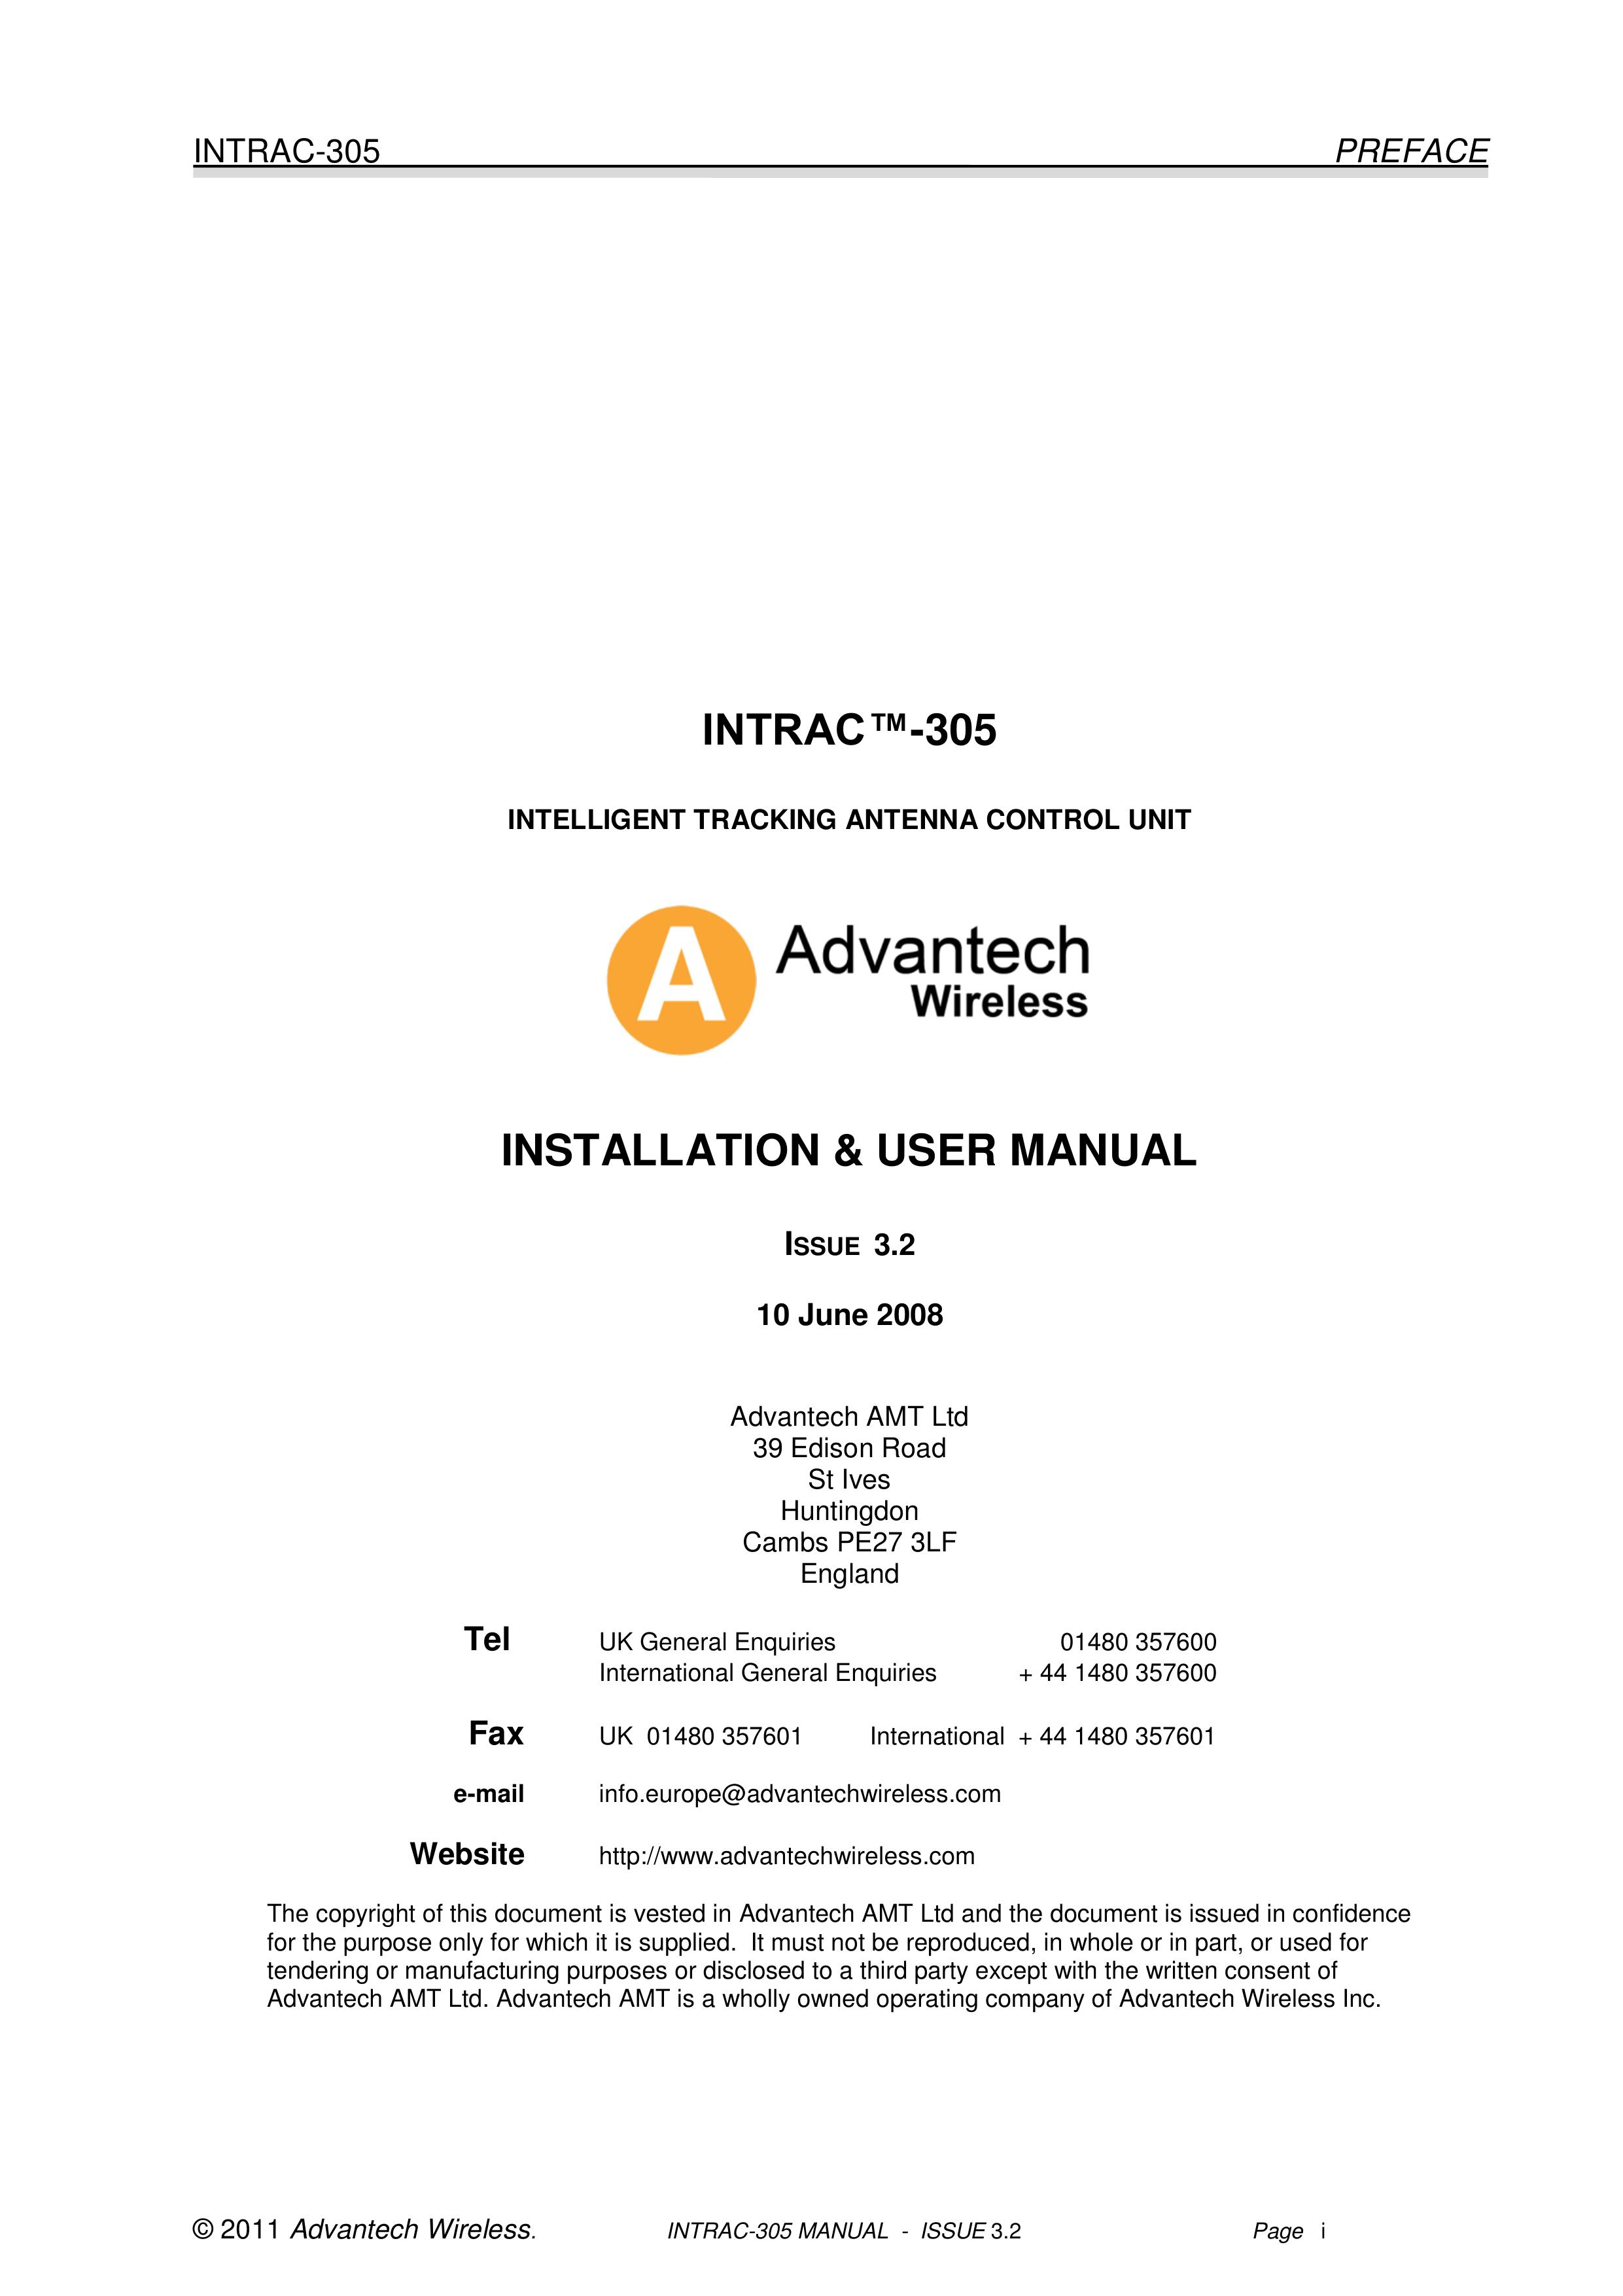 Advantech INTRAC-305 Washer User Manual